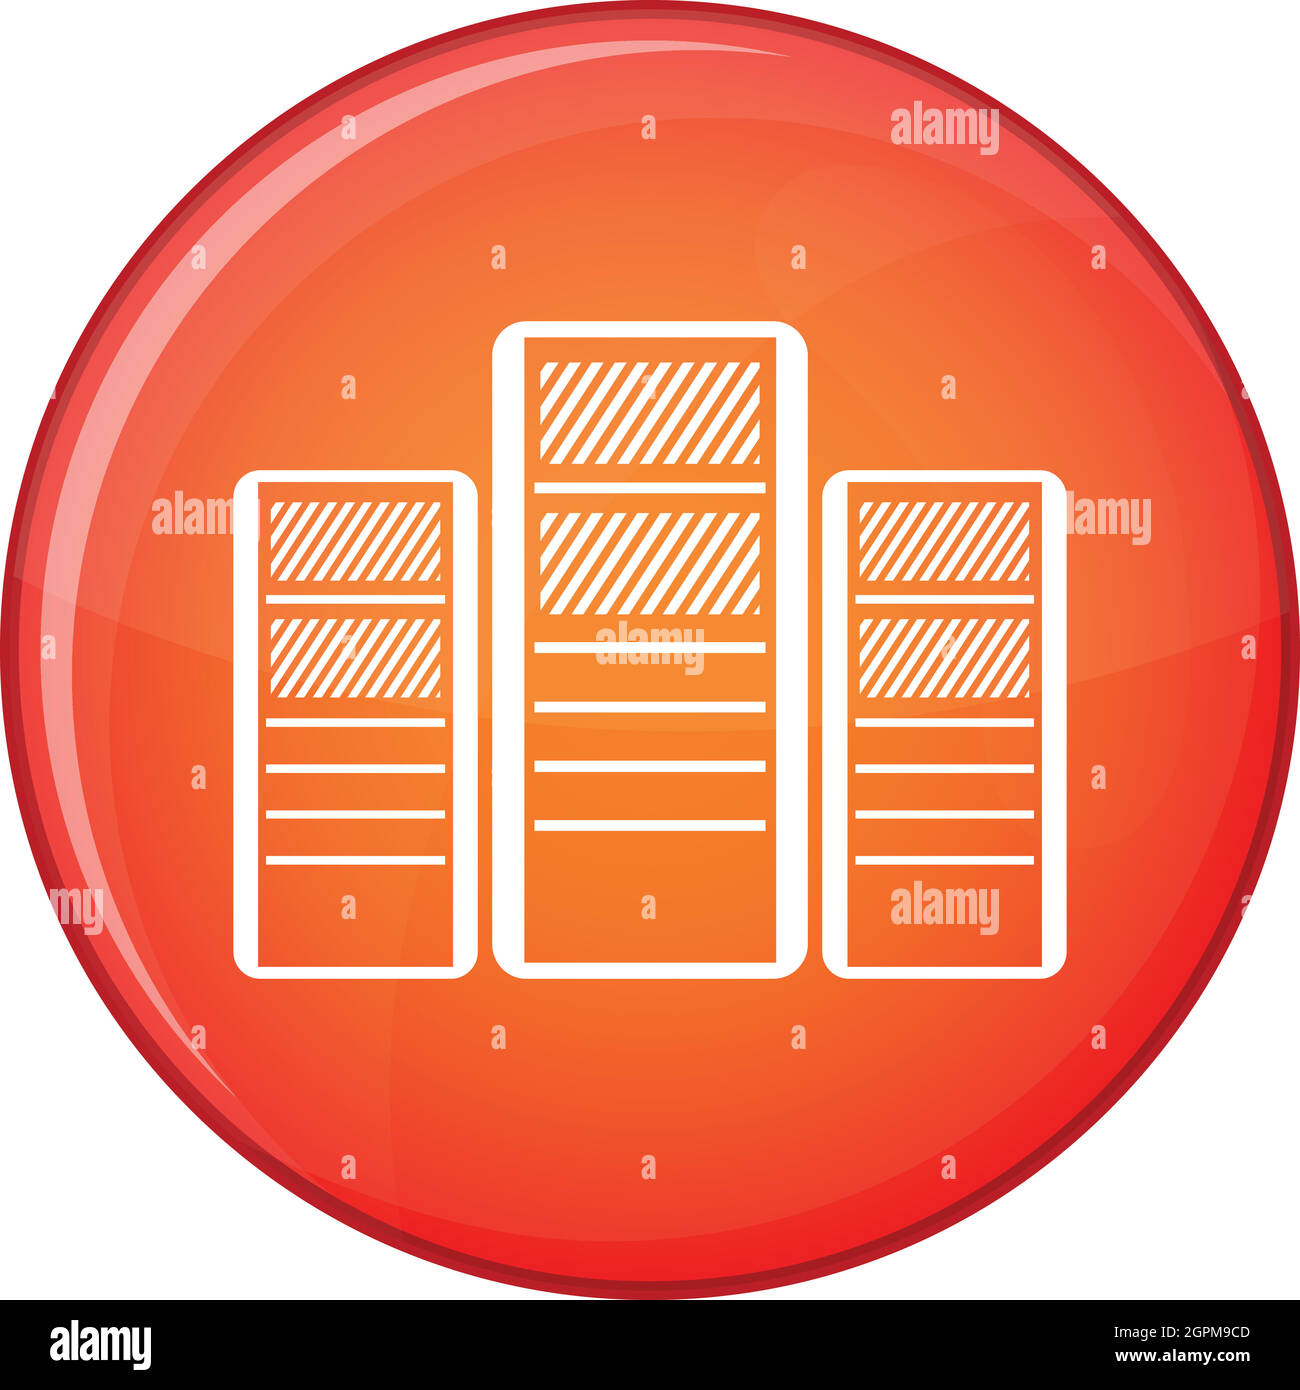 Database servers icon, flat style Stock Vector